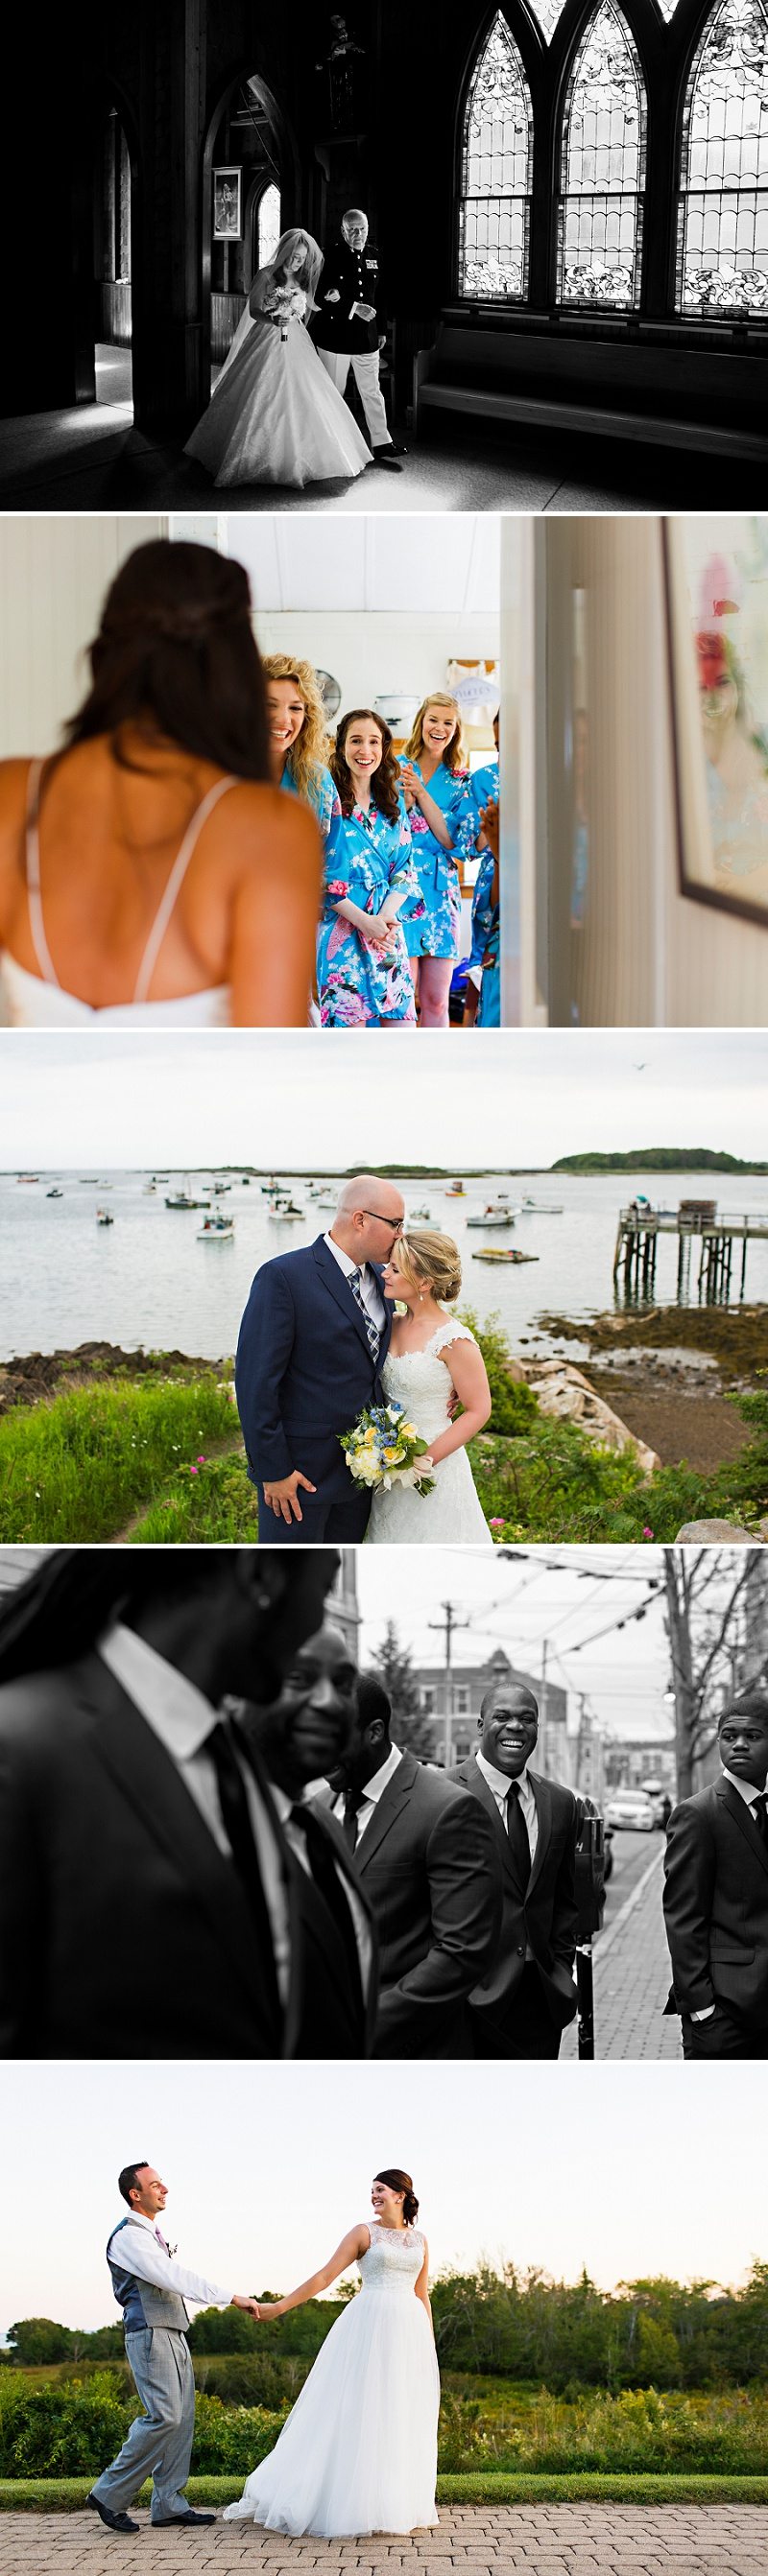 Best-wedding-photos-of-2015-0003